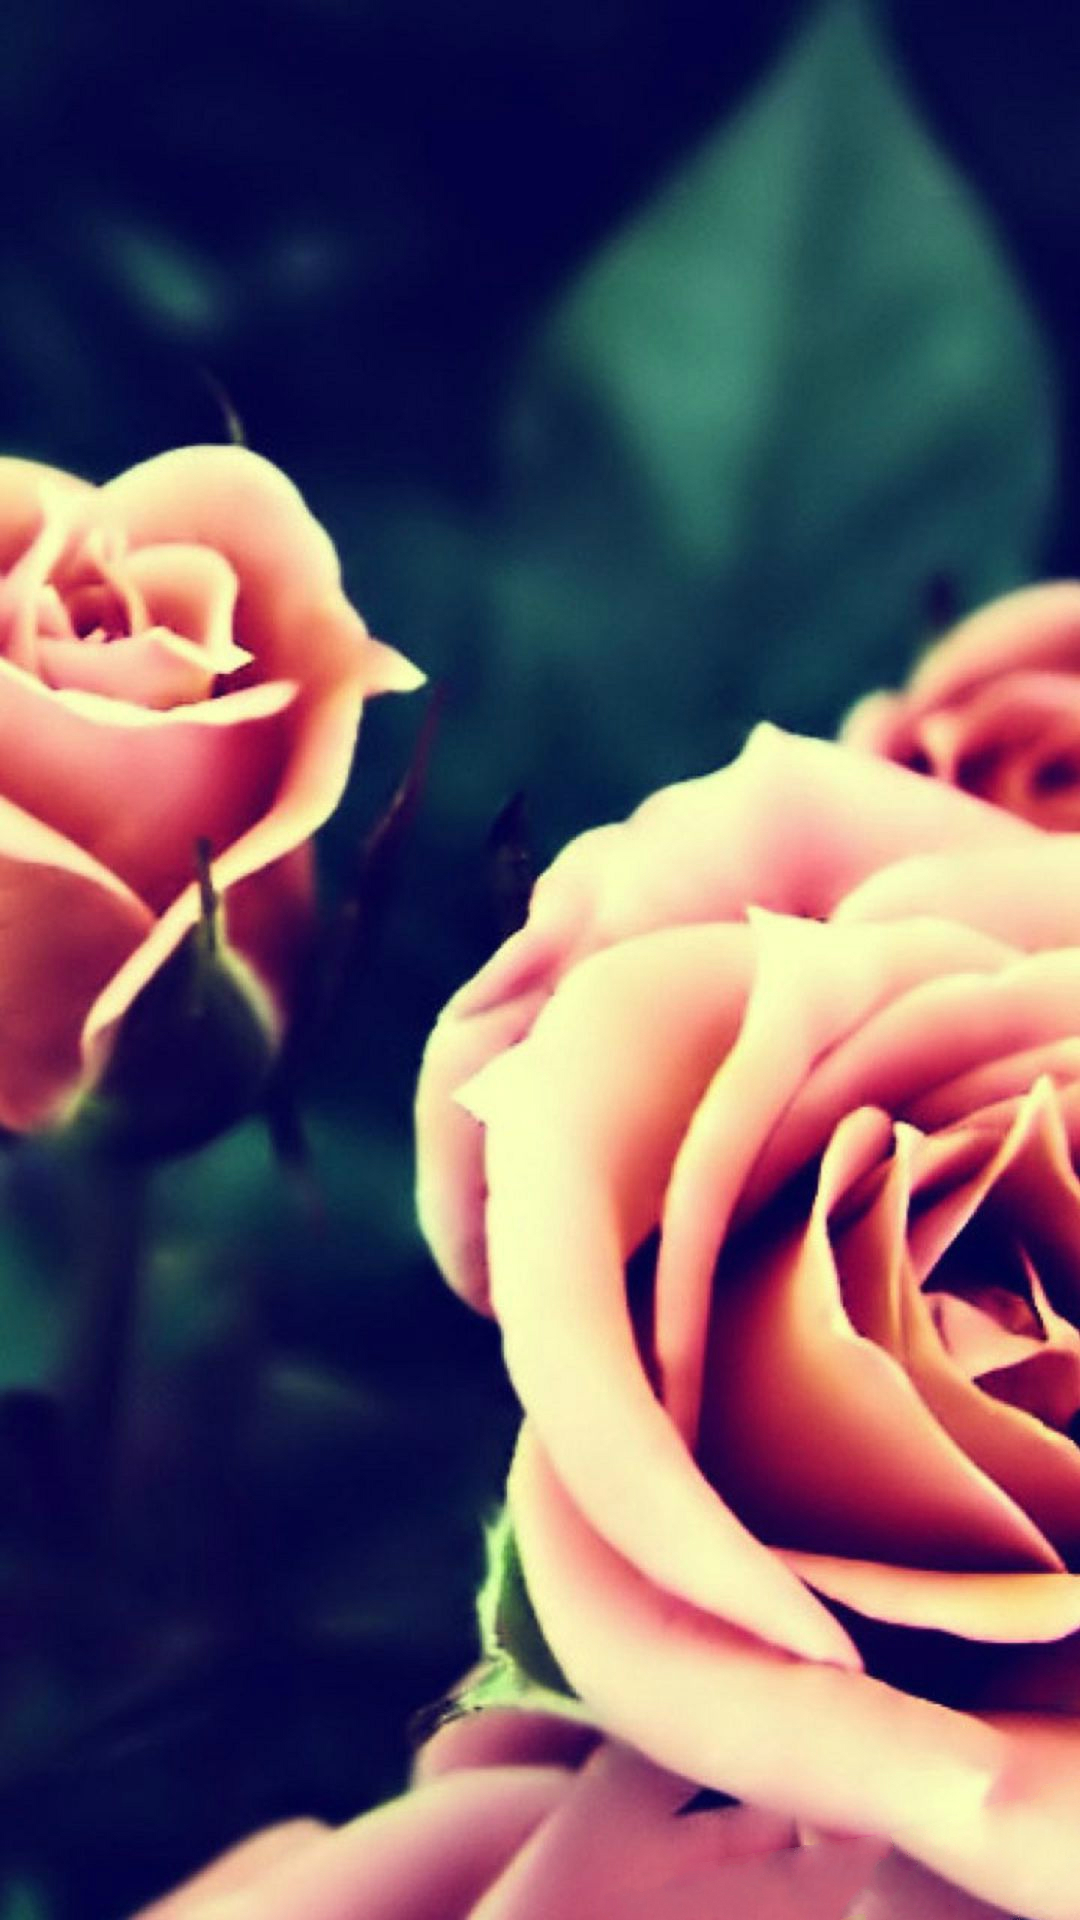 Vintage Pink Roses Closeup iPhone Wallpaper